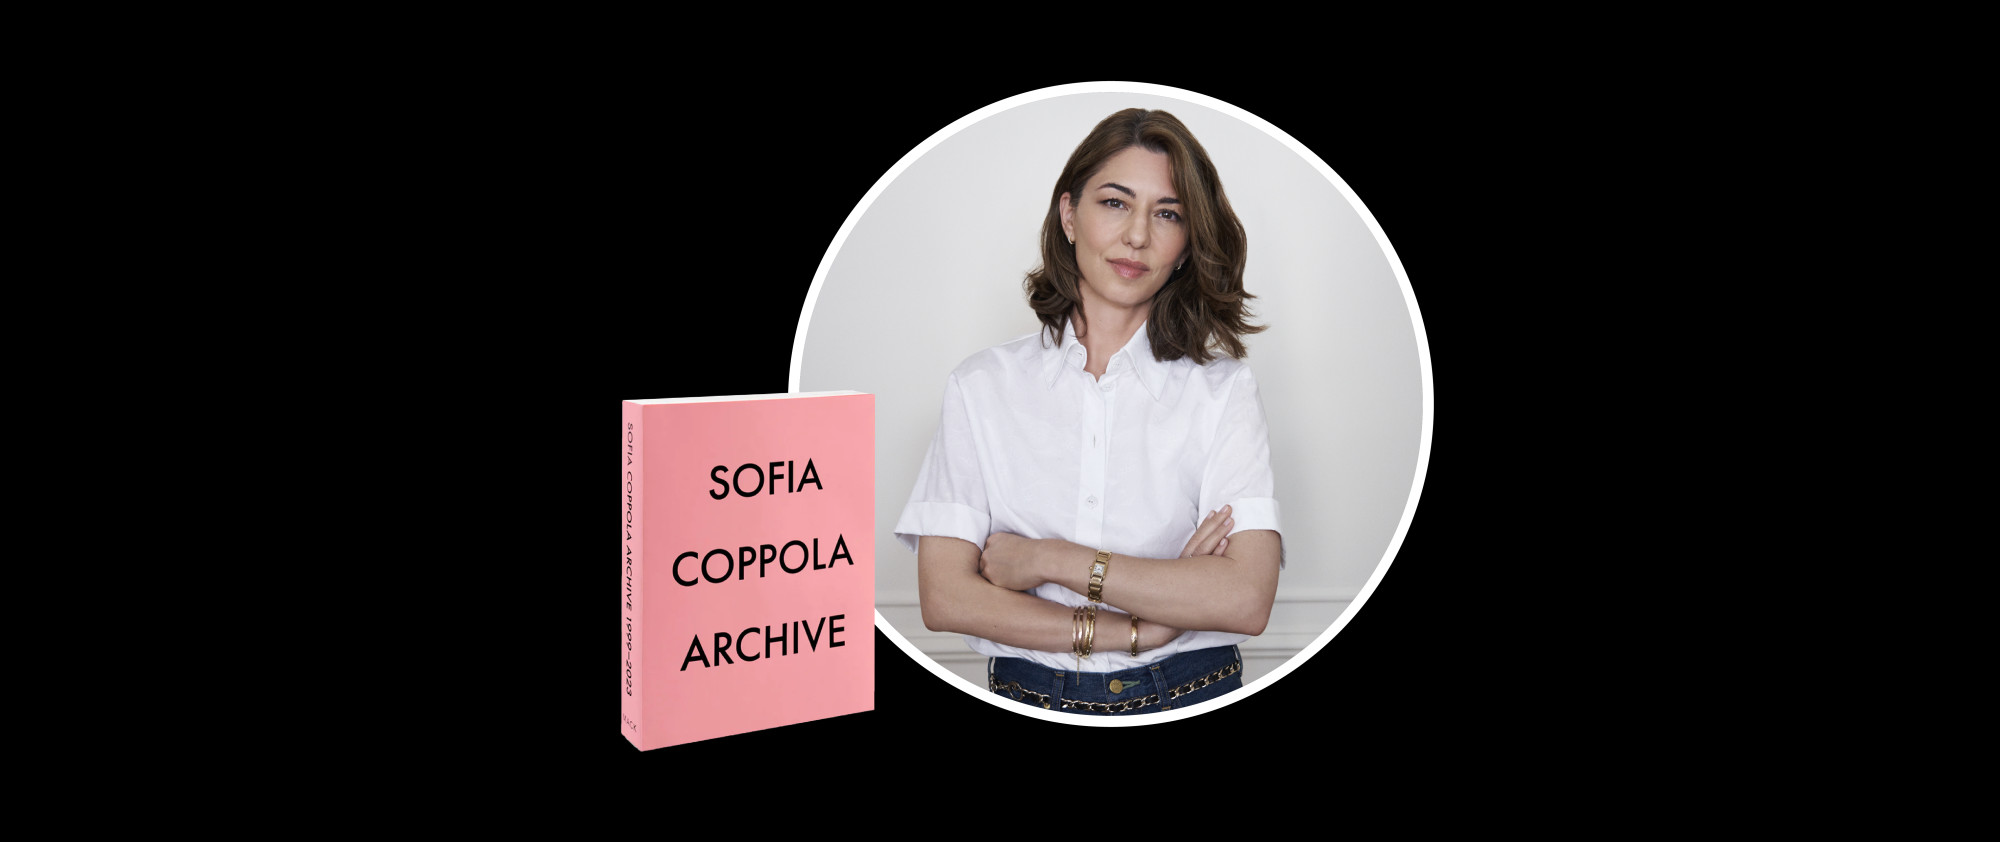 🩷 sofia coppola archive 🩷 #sofiacoppola #sofiacoppolafilm #sofiacop